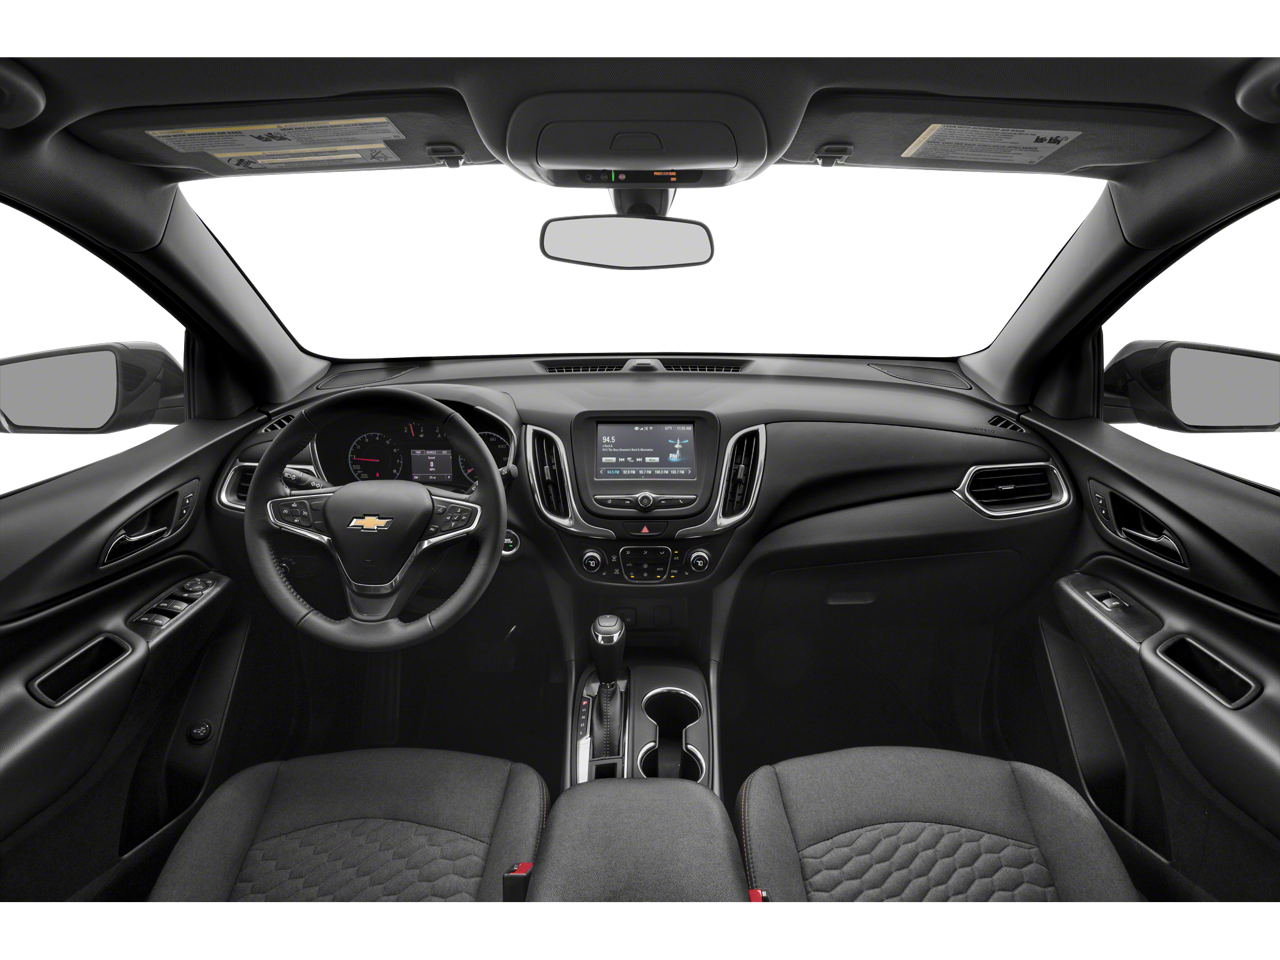 2020 Chevrolet Equinox LT w/1LT All-wheel Drive